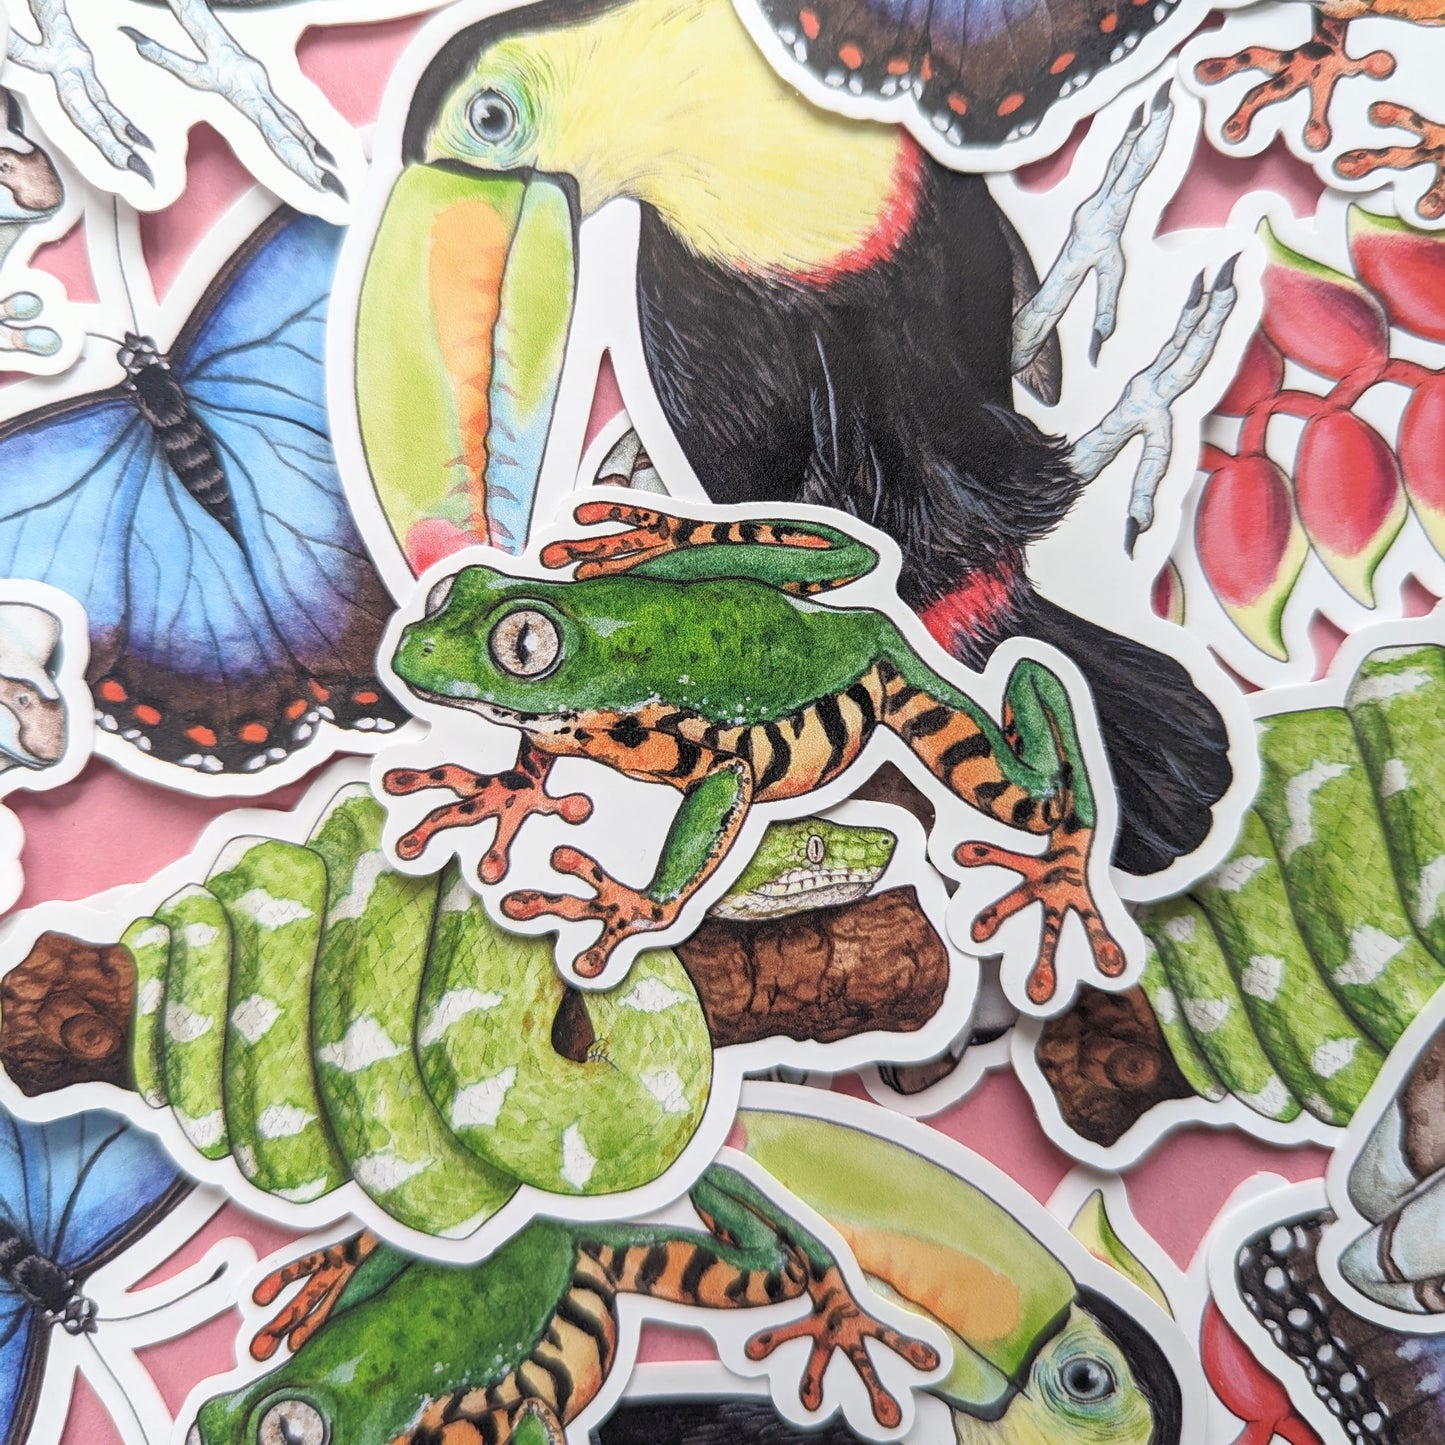 Amazon Rainforest Sticker Pack - Set of 6